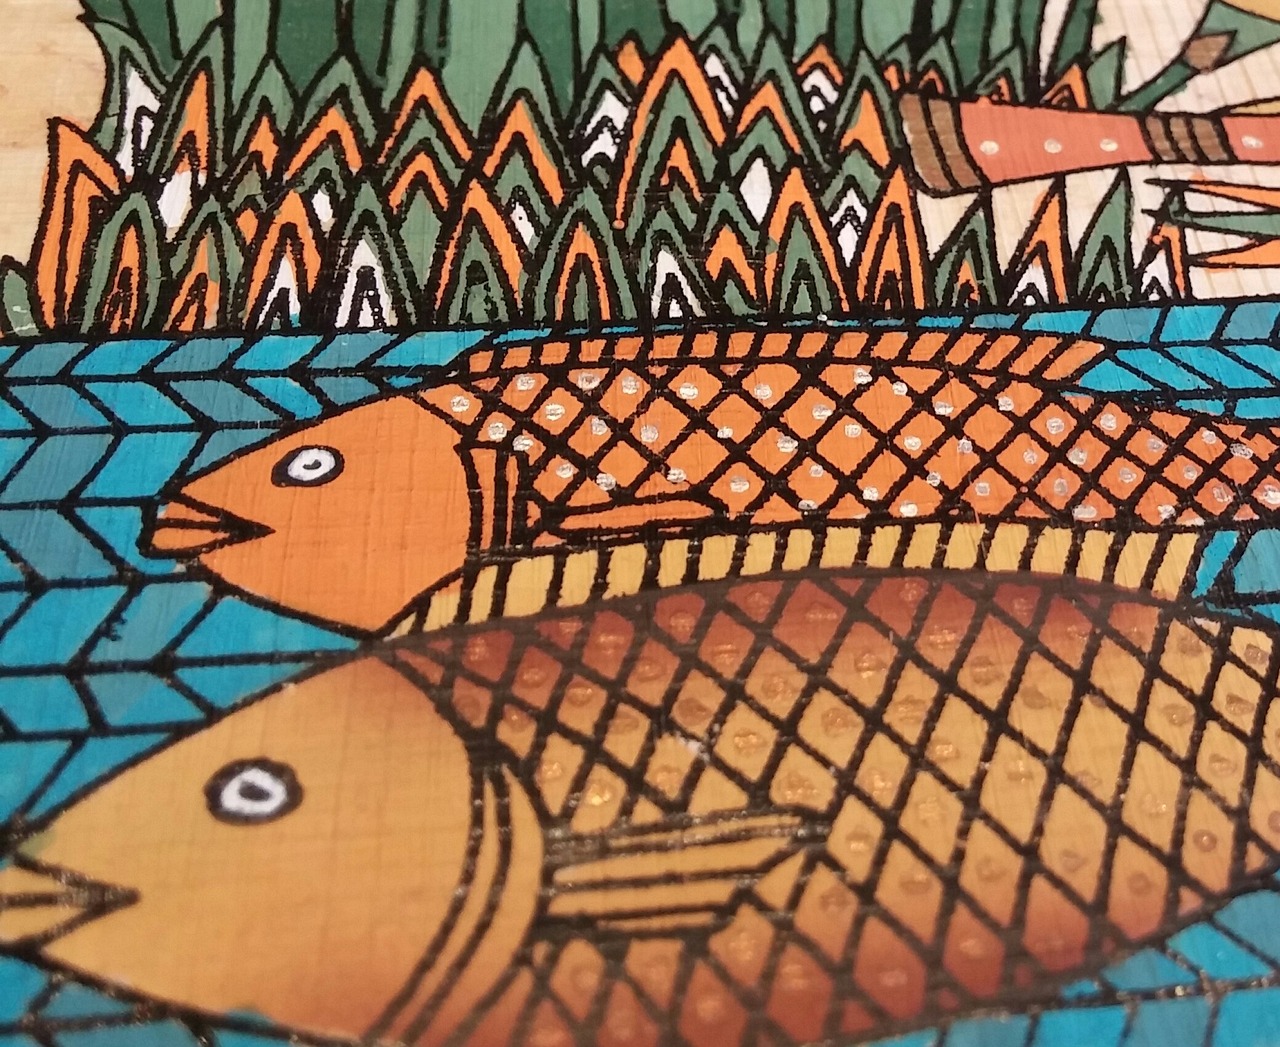 Pitture egizie sulla pesca